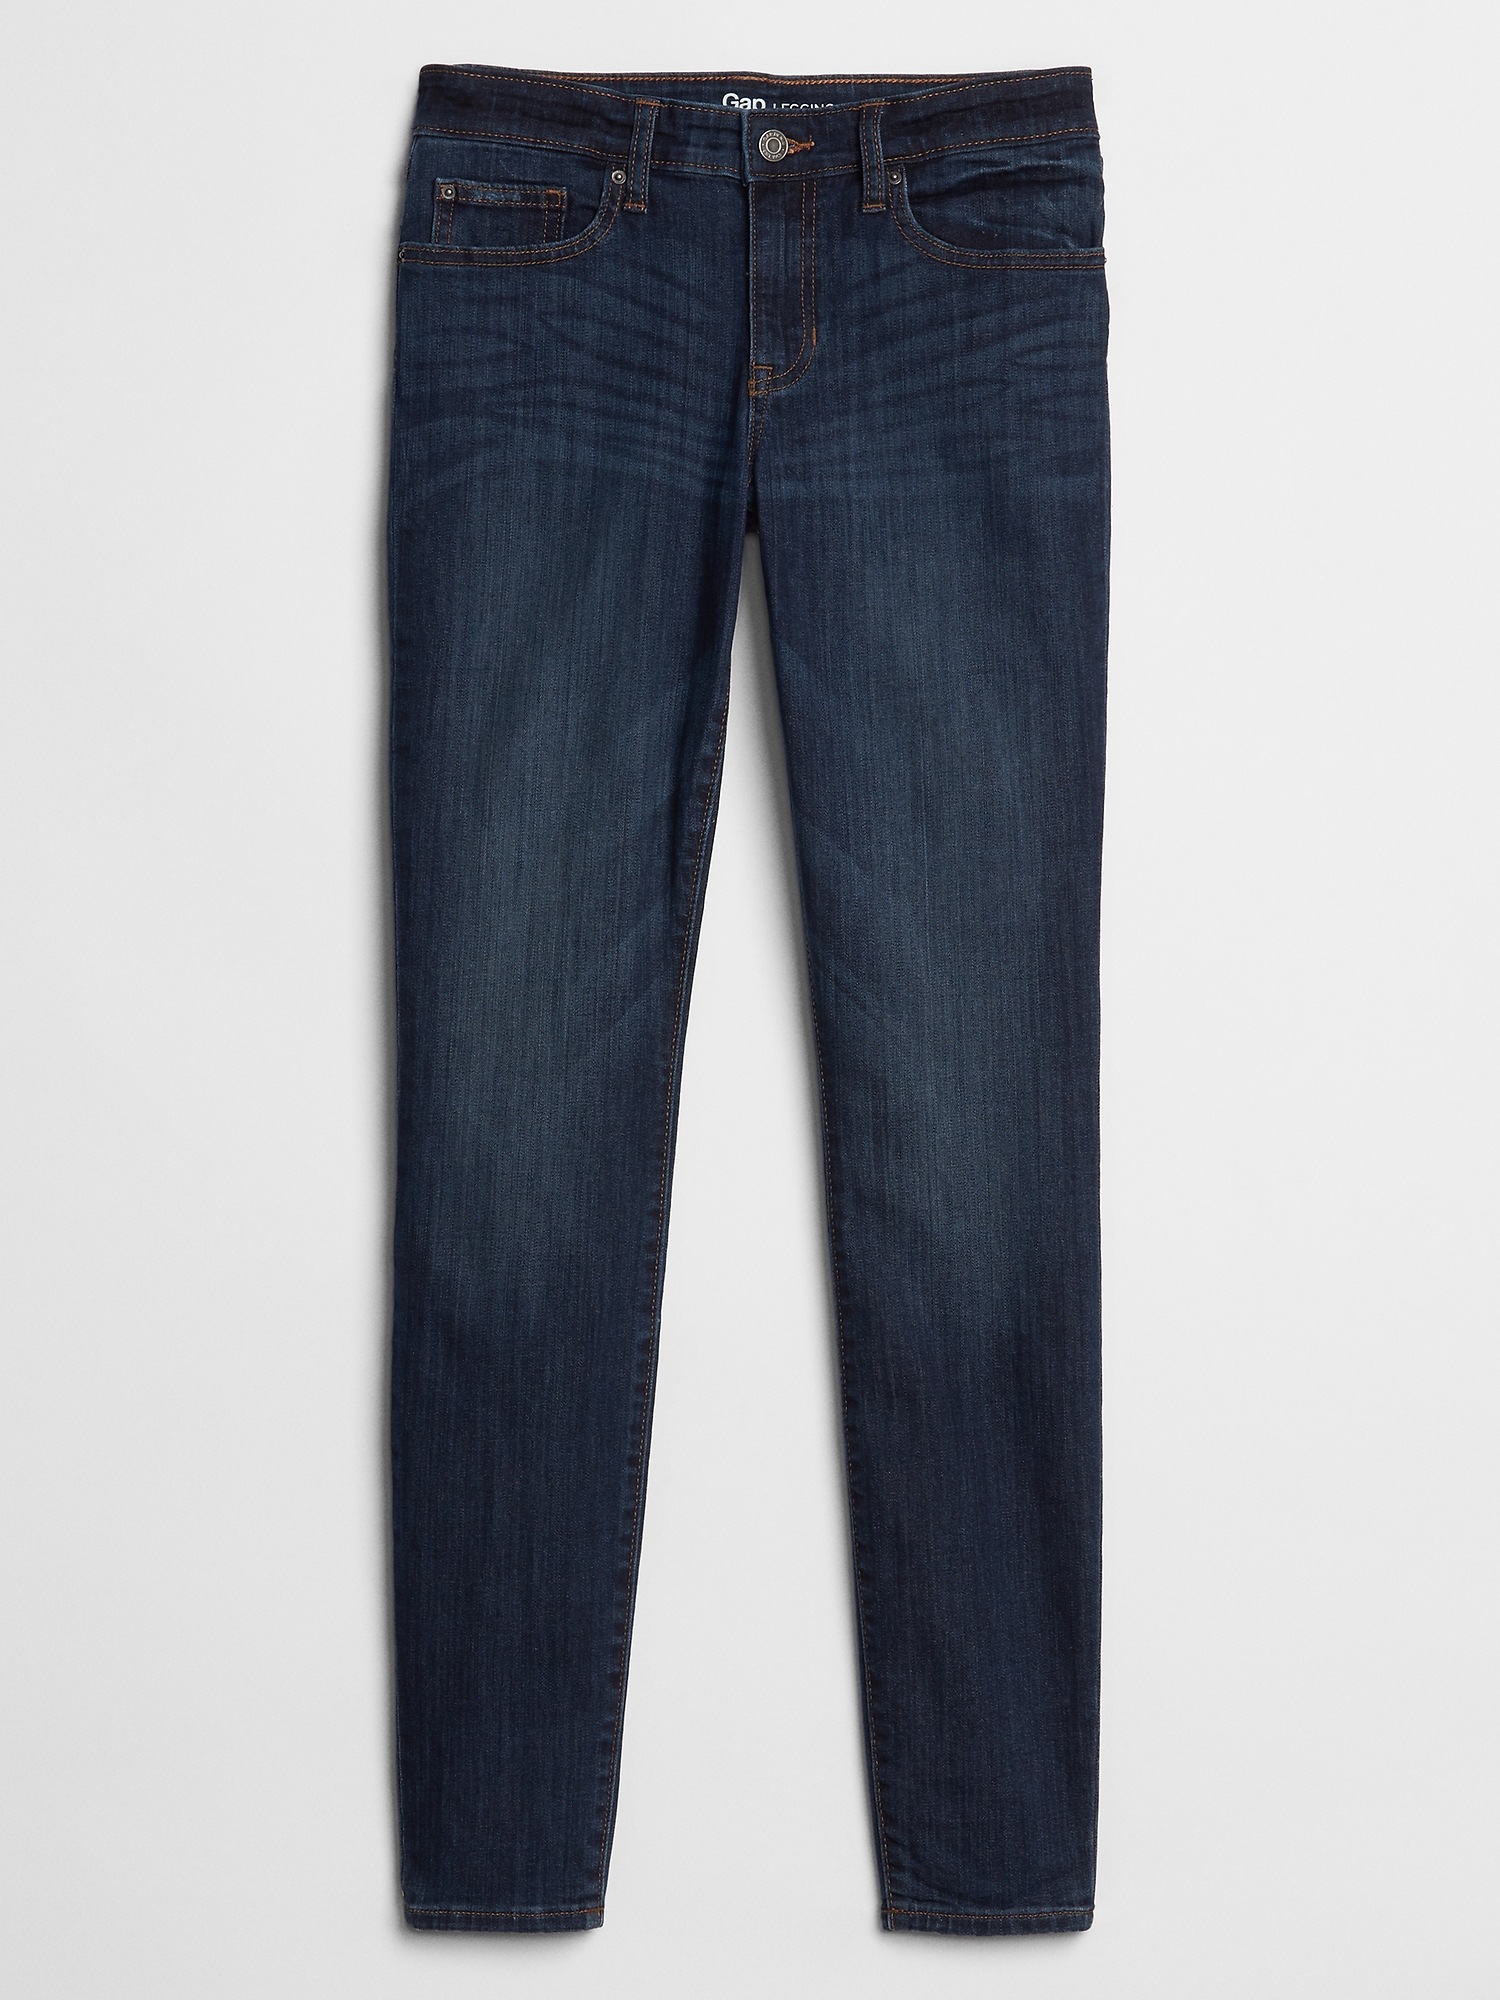 Leggins_Summer_Green/ Fit jeans/ladies pant